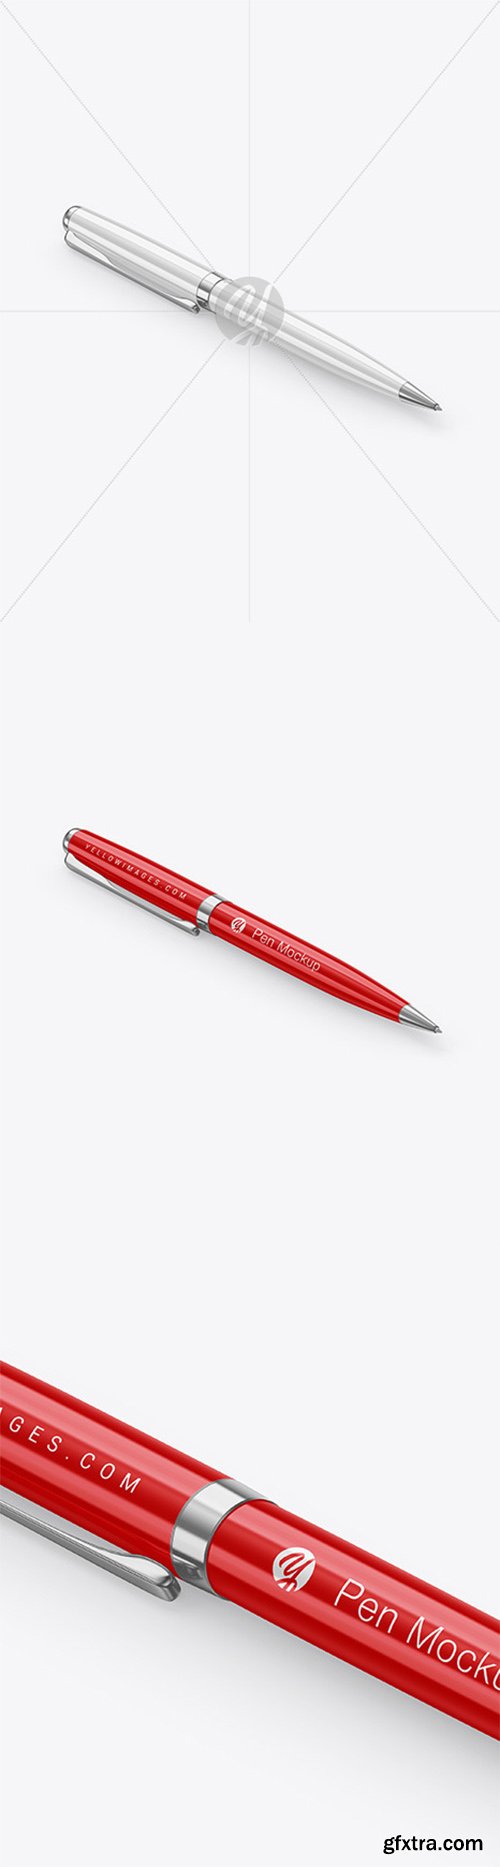 Glossy Pen w/ Metallic Finish Mockup 65922